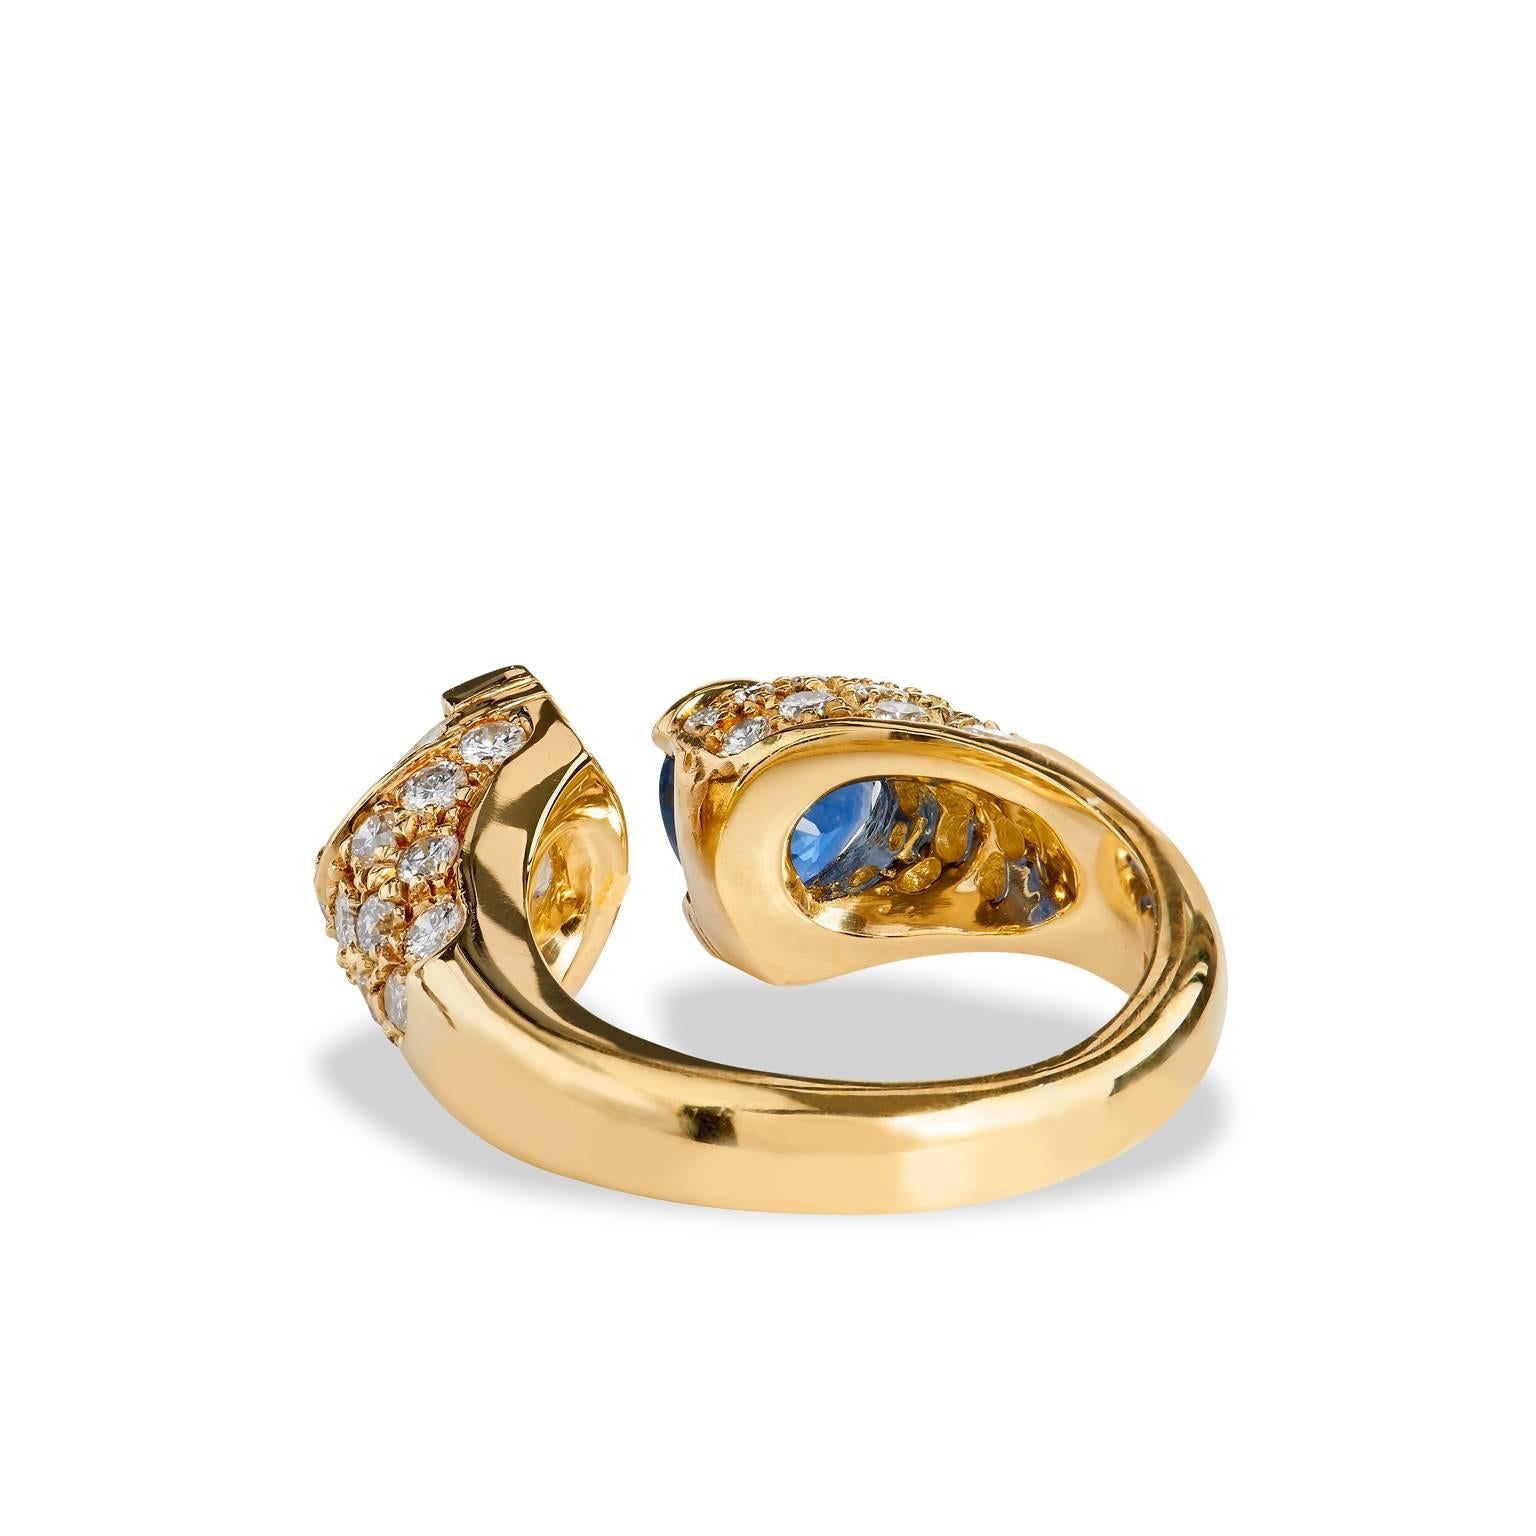 Moi et Toi 1.14 ct Blue Sapphire & .78 ct Heart Shaped Diamond 18 kt Gold Ring 1